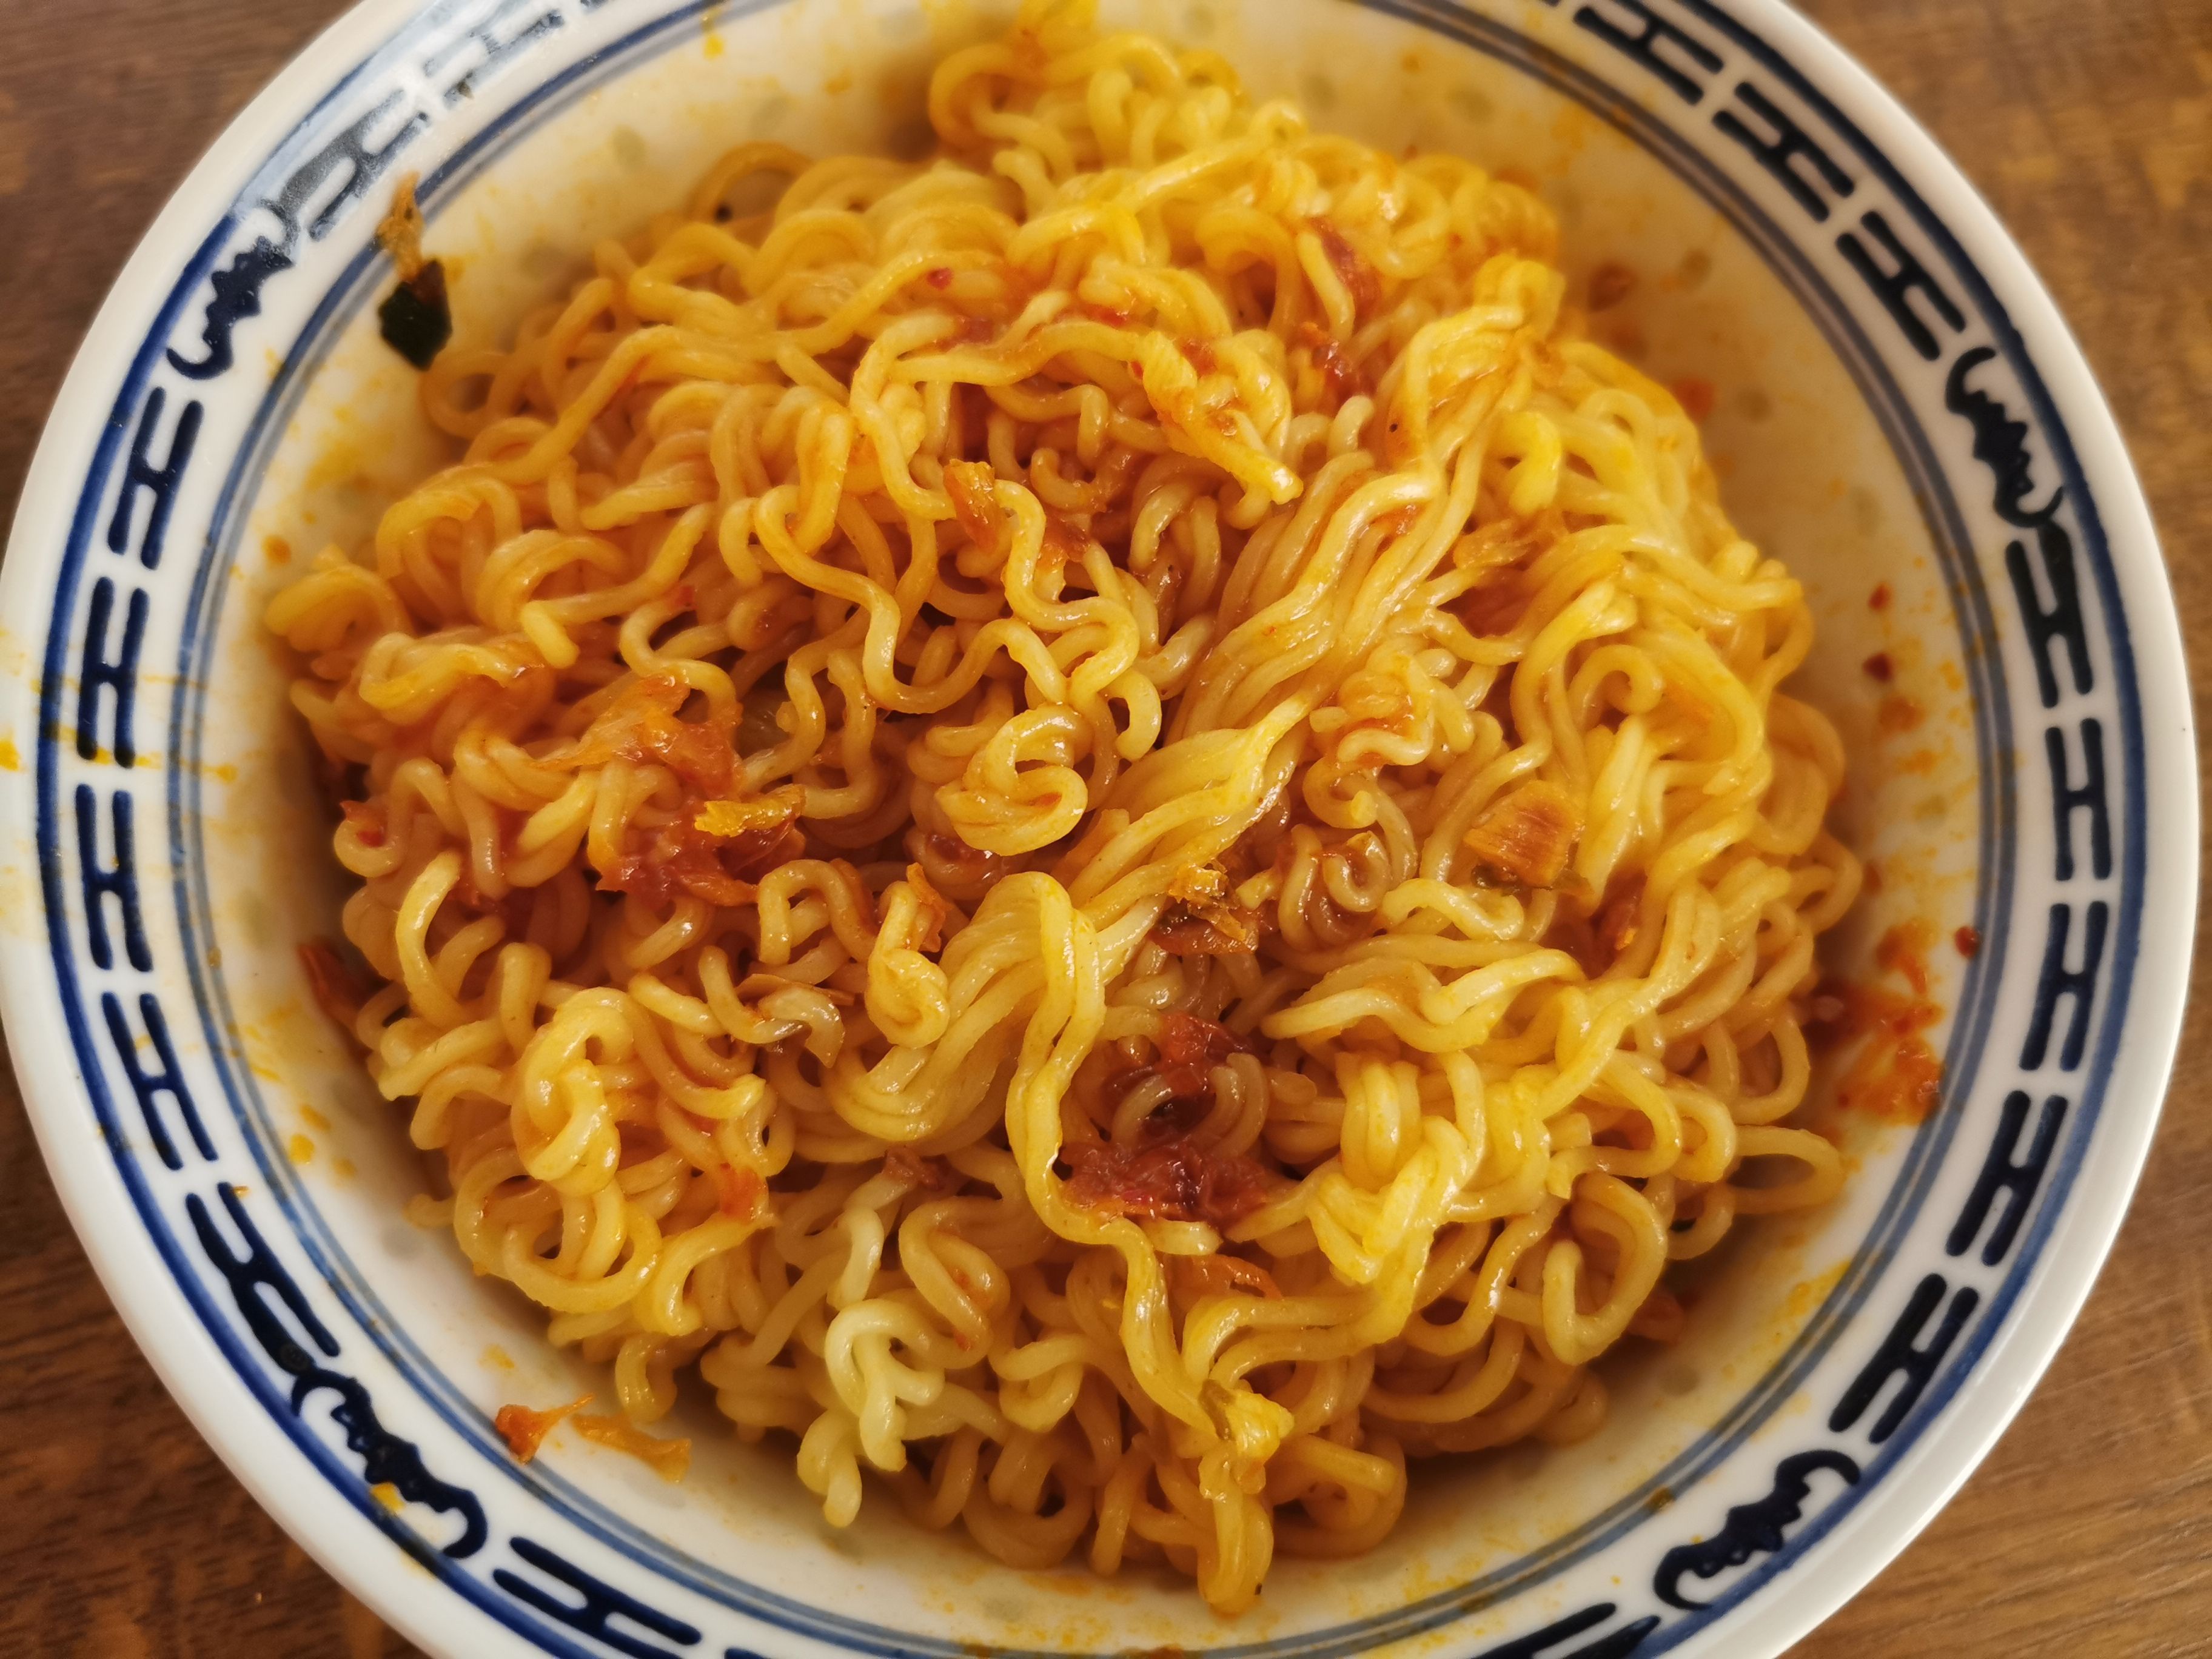 #2321: Nongshim "Shin Hot Kimchi Stir Fried Noodles"